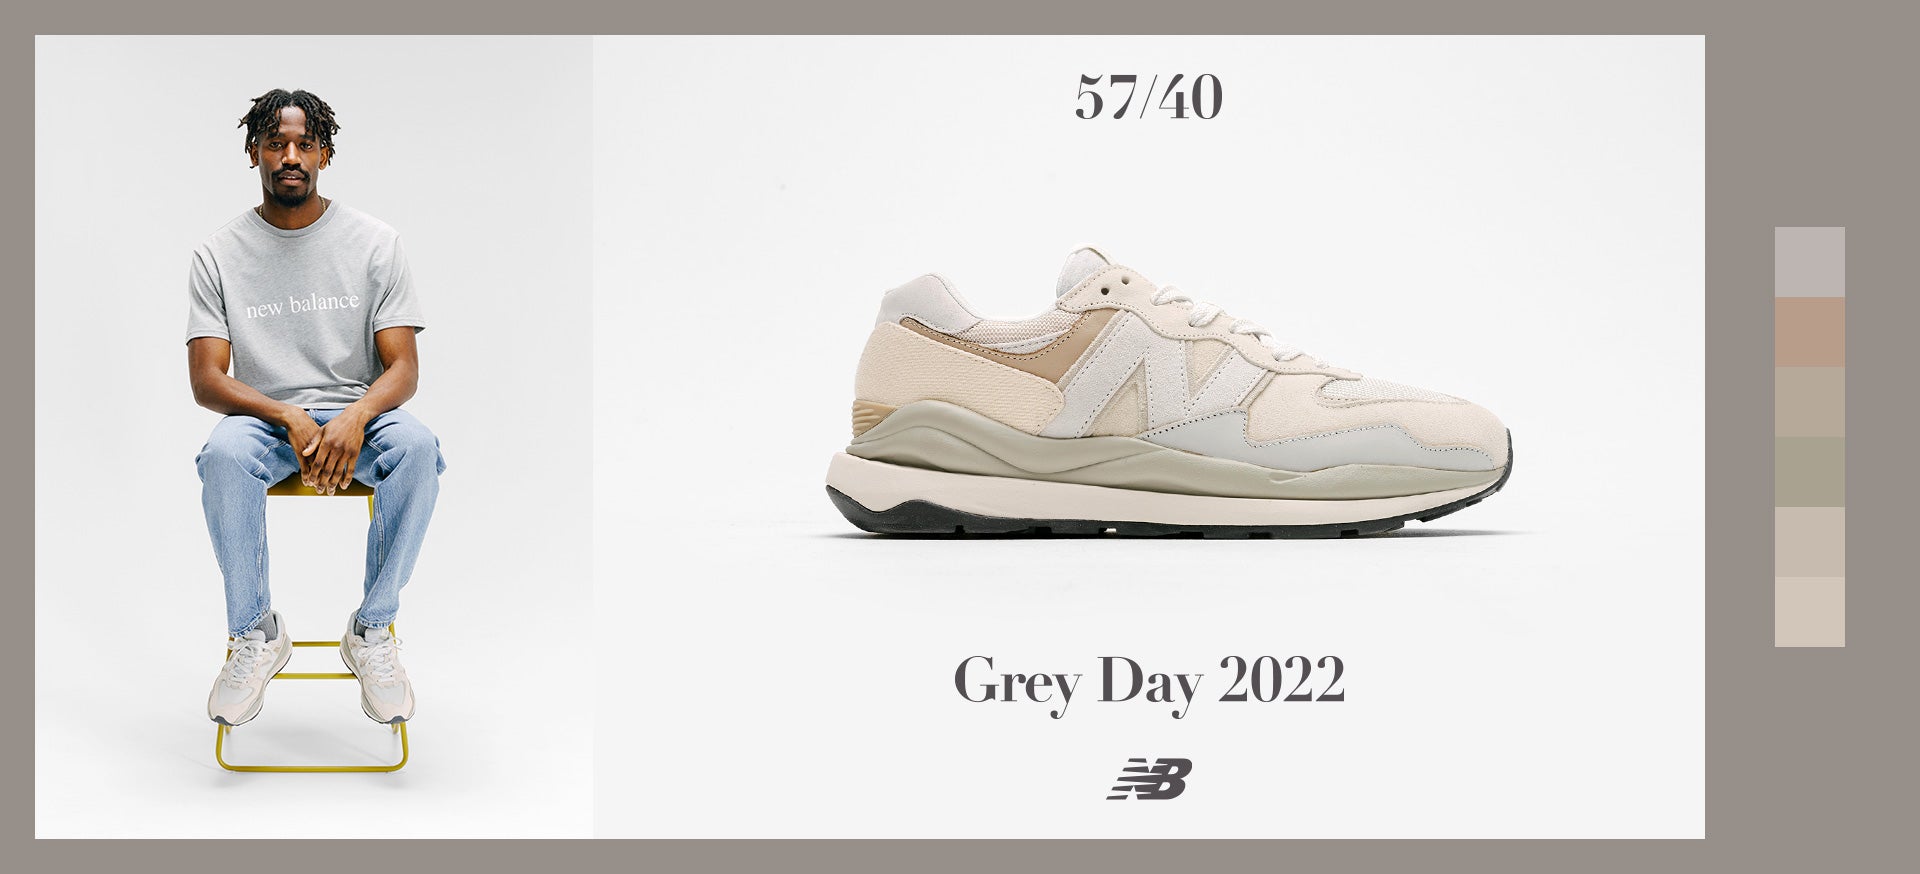 57/40, Grey Day 2022